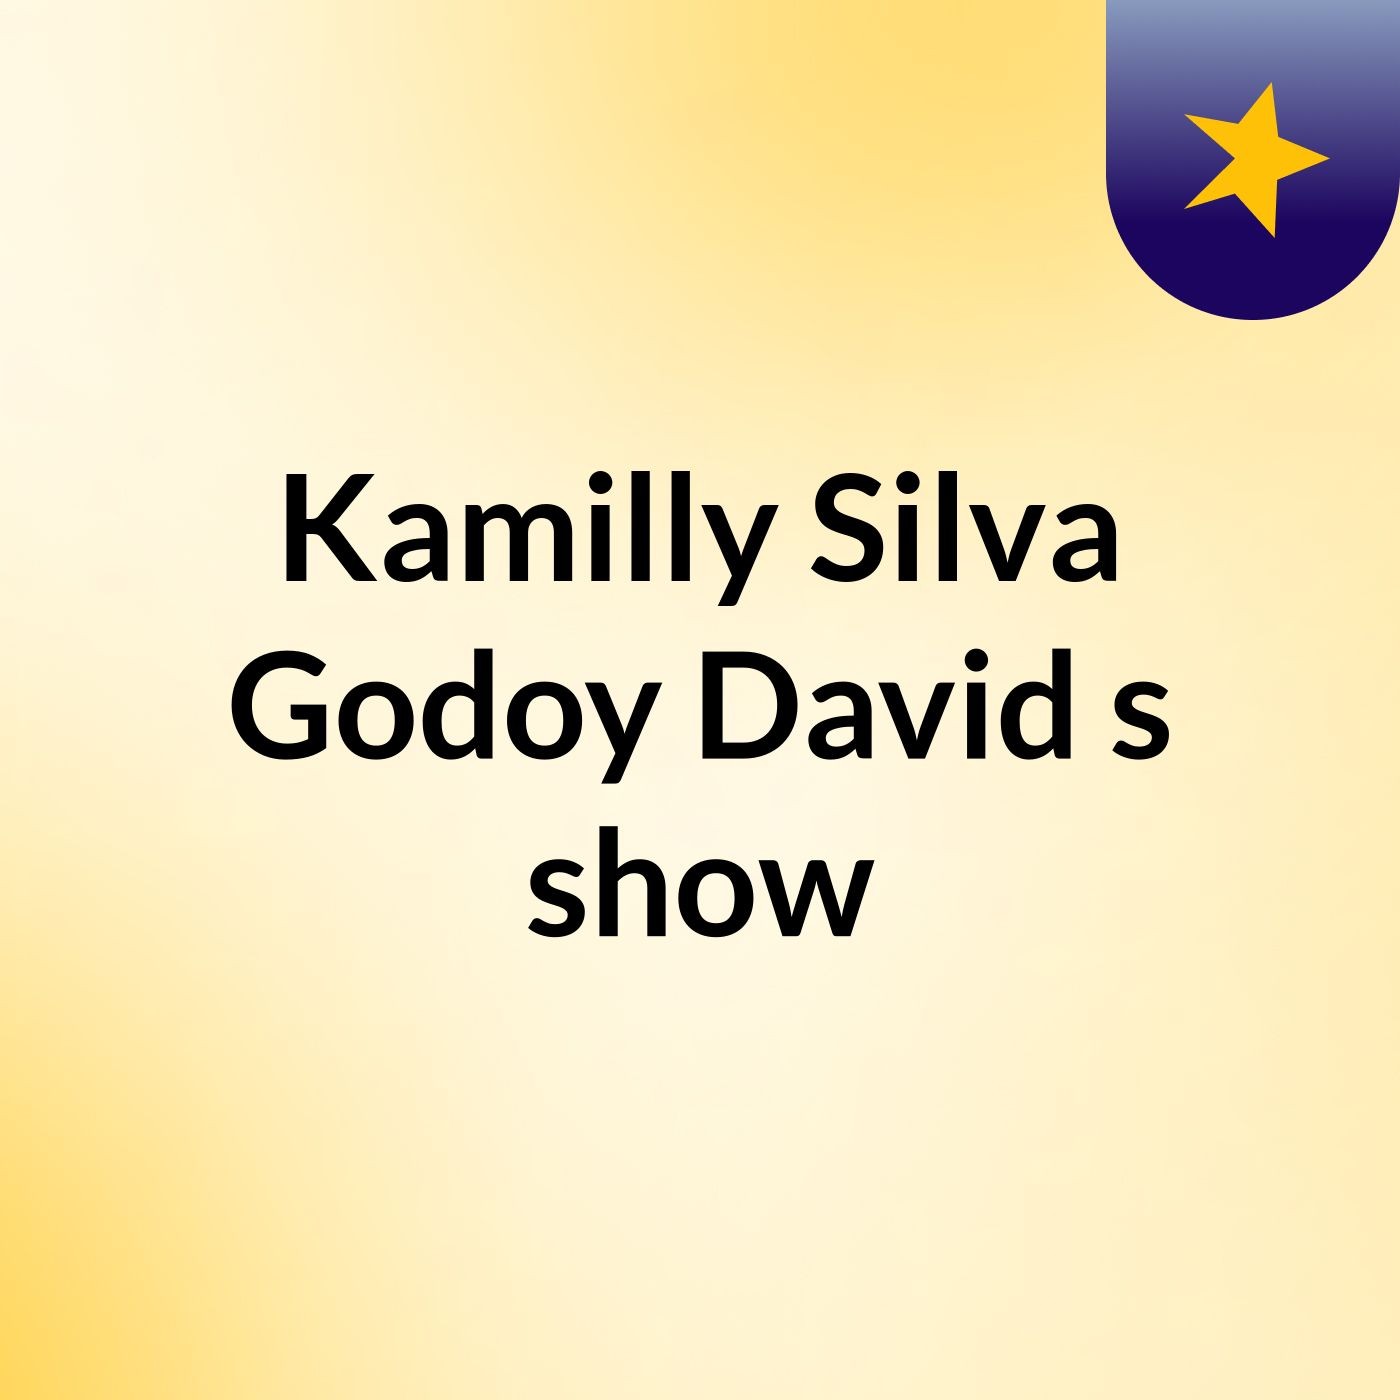 Episódio 5 - Kamilly Silva Godoy David's show